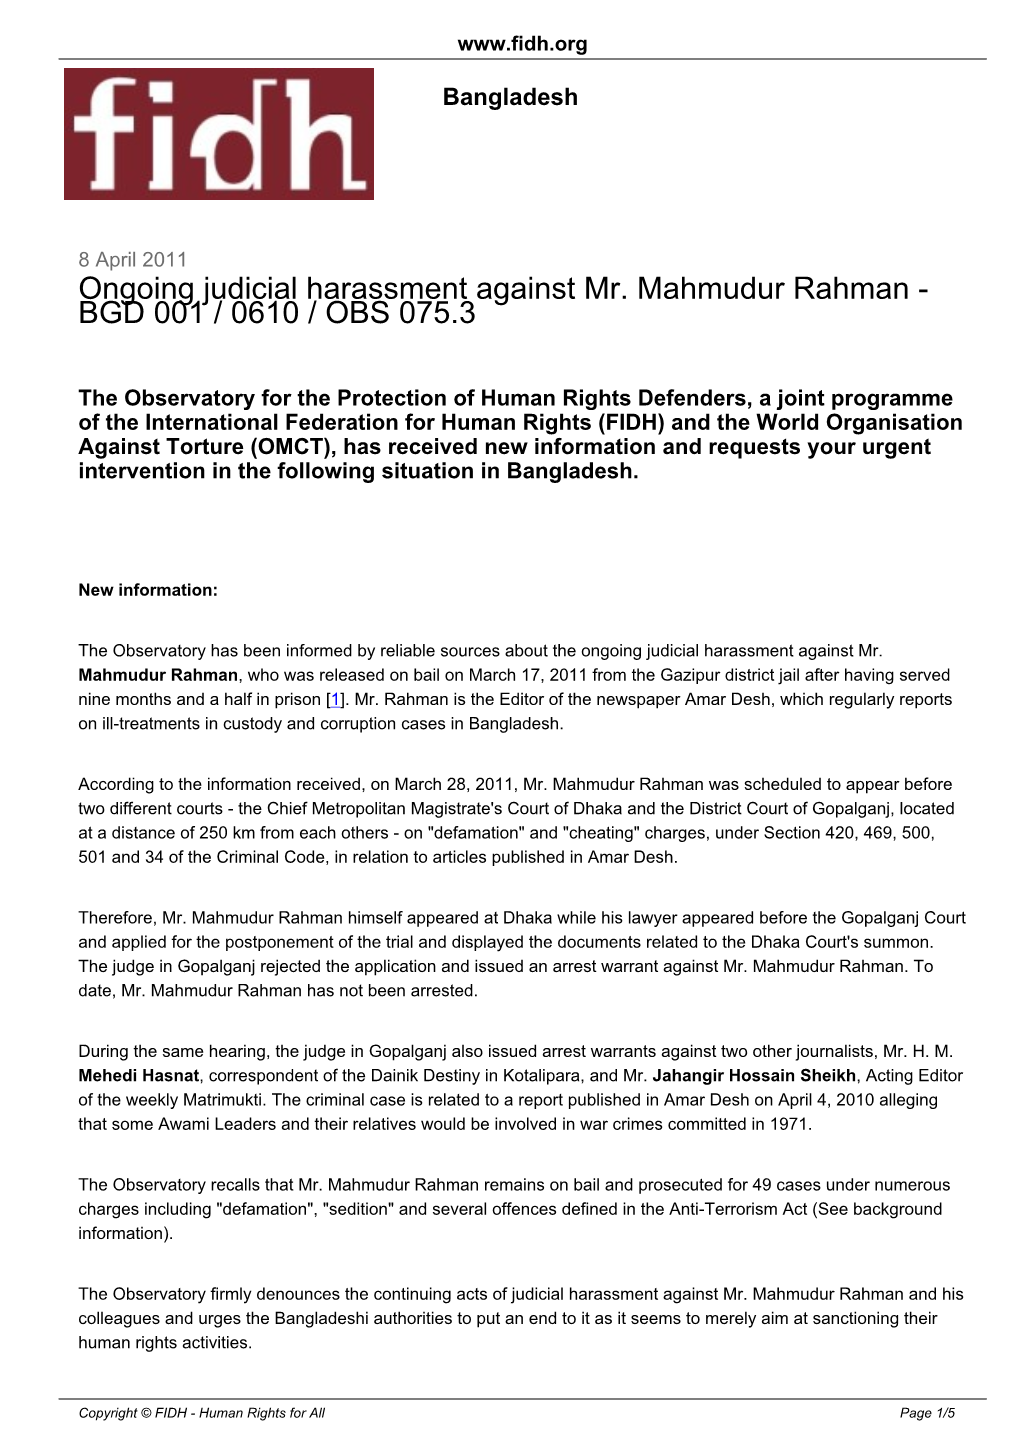 Ongoing Judicial Harassment Against Mr. Mahmudur Rahman - BGD 001 / 0610 / OBS 075.3